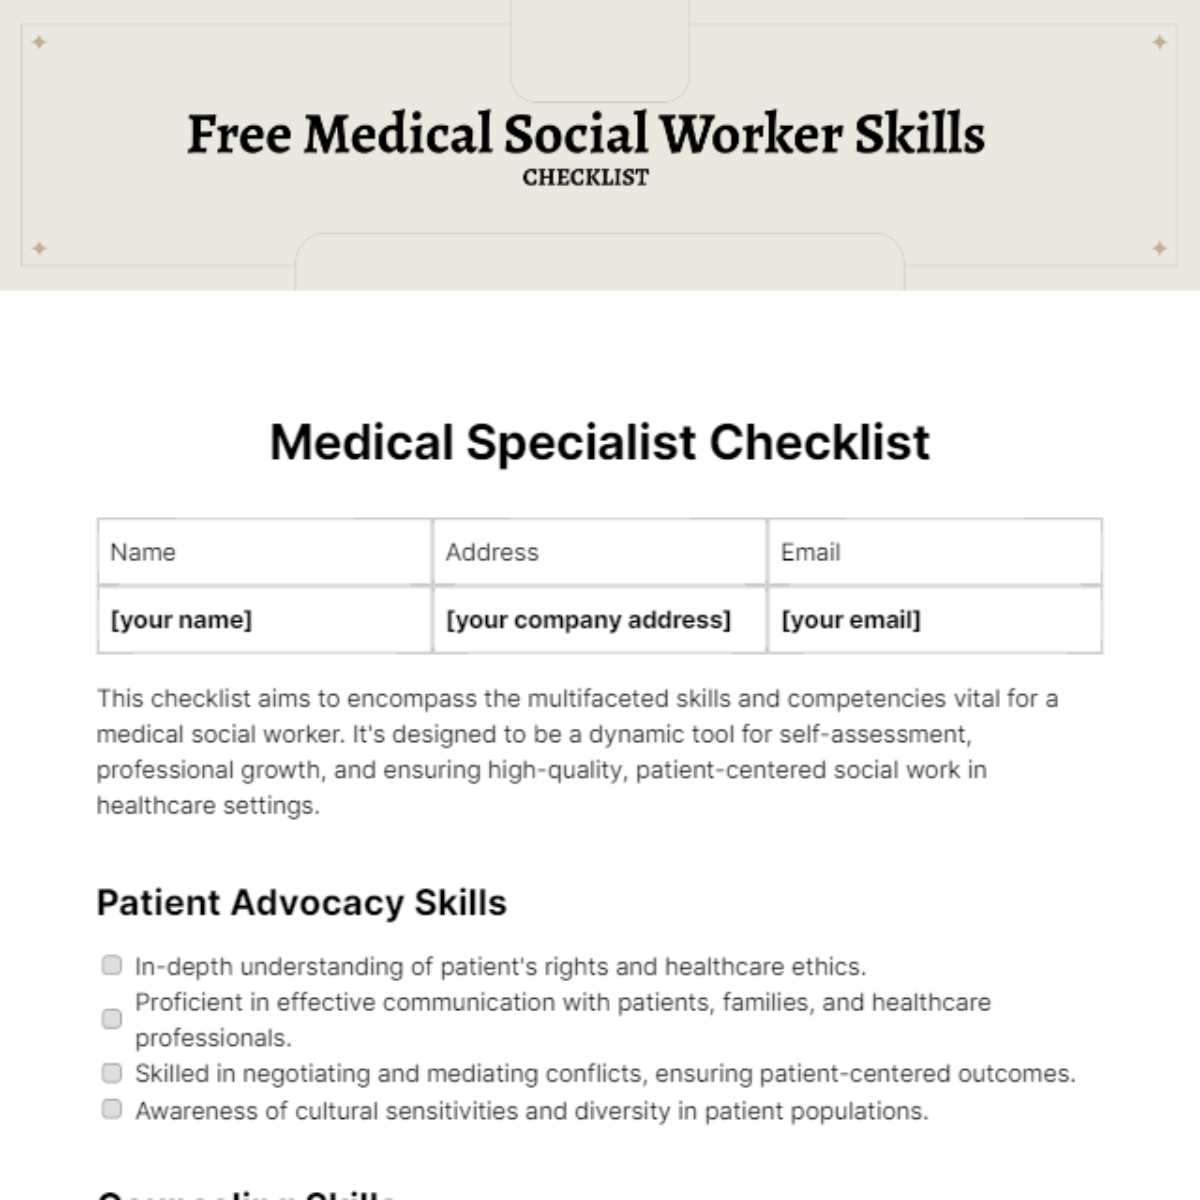 Medical Social Worker Skills Checklist Template